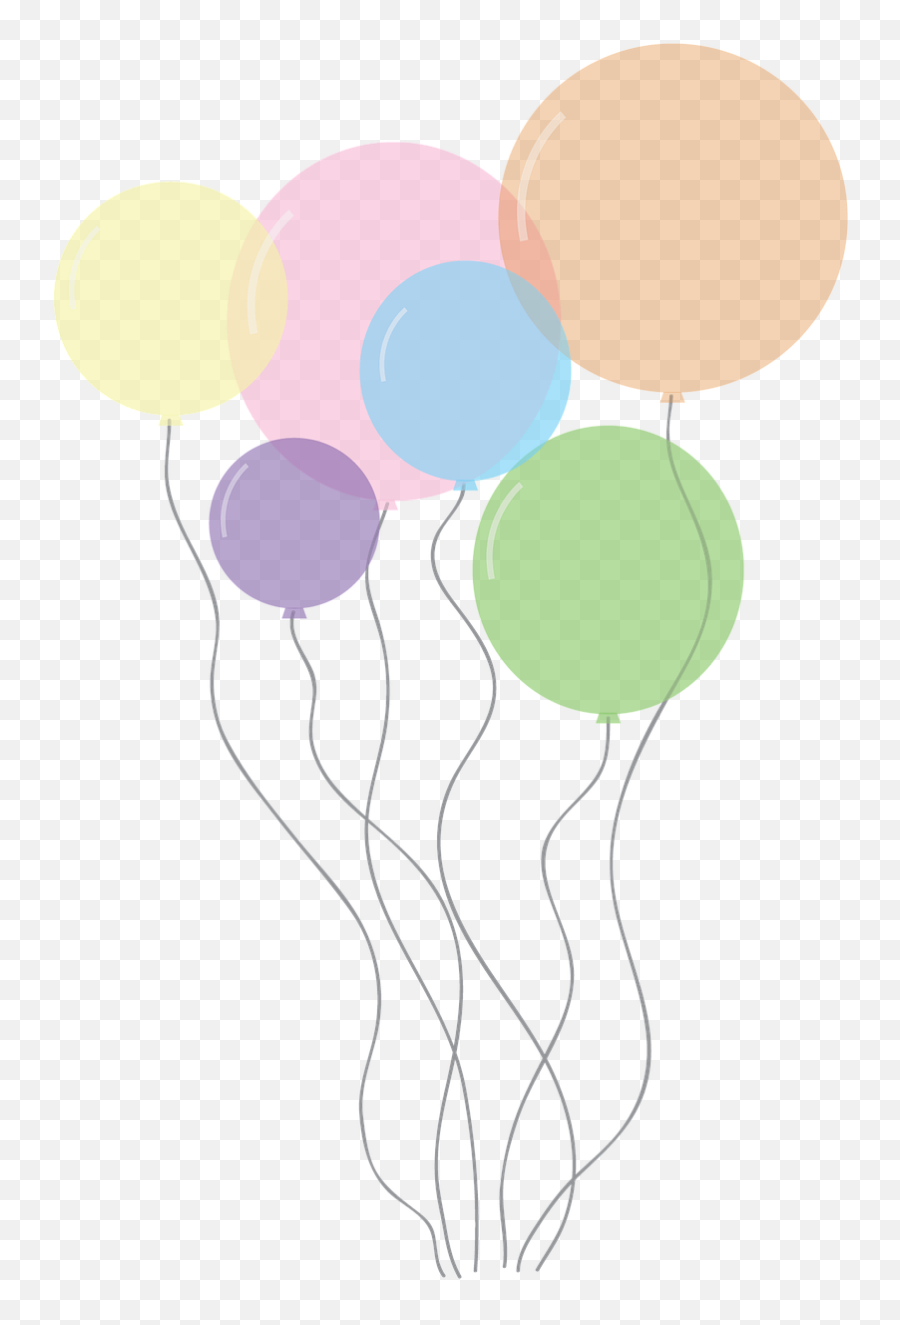 Artfree Pictures - Transparent Background Pastel Balloons Emoji,Balloons Clipart Transparent Background